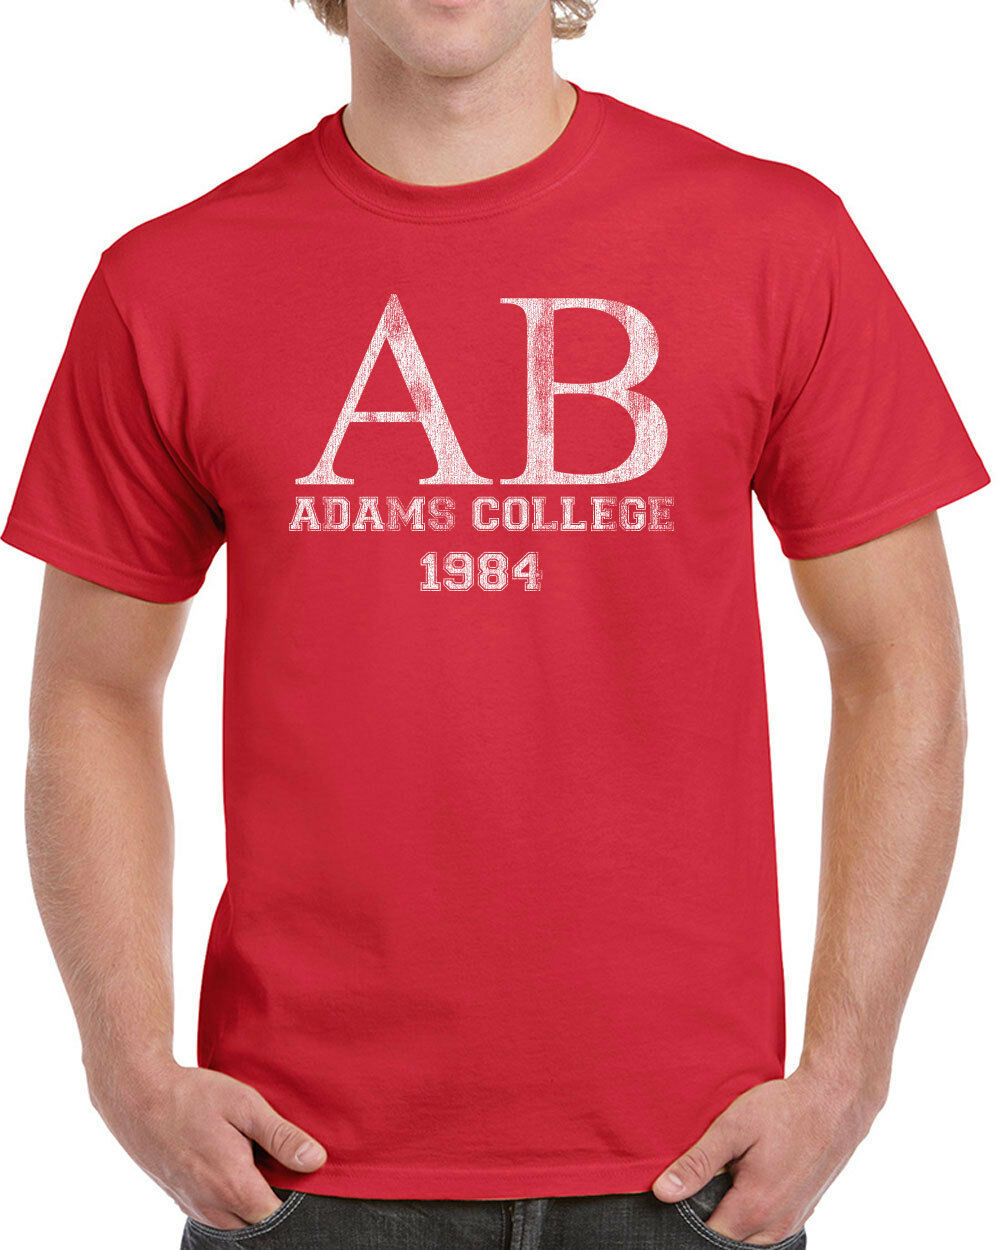 589 Alpha Beta mens T-shirt costume revenge 80s movie nerds jocks vintage new - $17.99 - $22.99